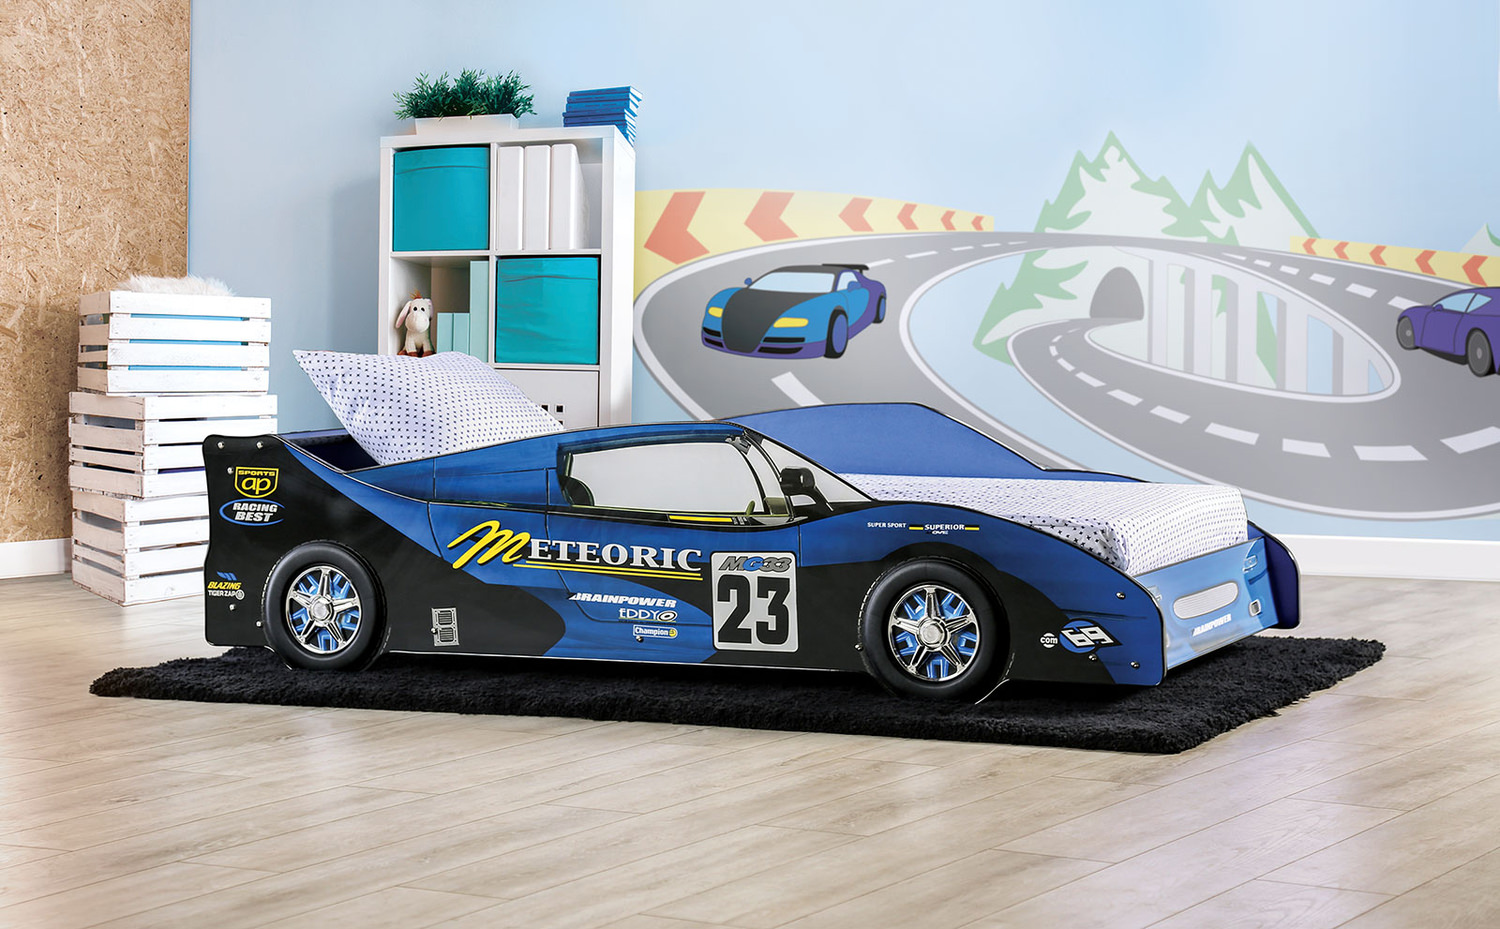 Meteoric Race Car Twin Bed